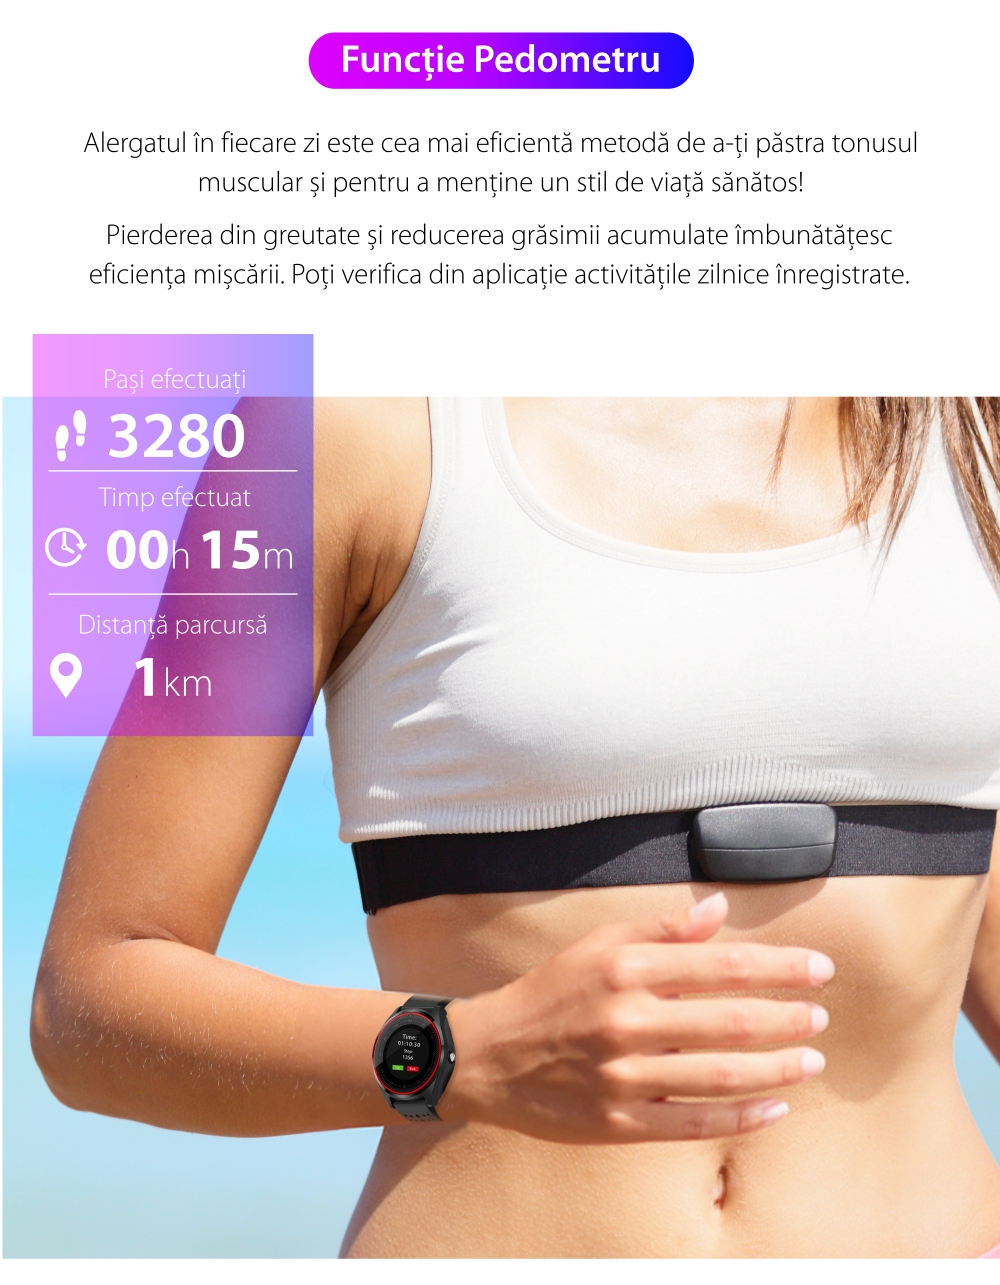 Salondecebal: Nokia , un telefon touchscreen ieftin magazin de sănătate online tj maxx